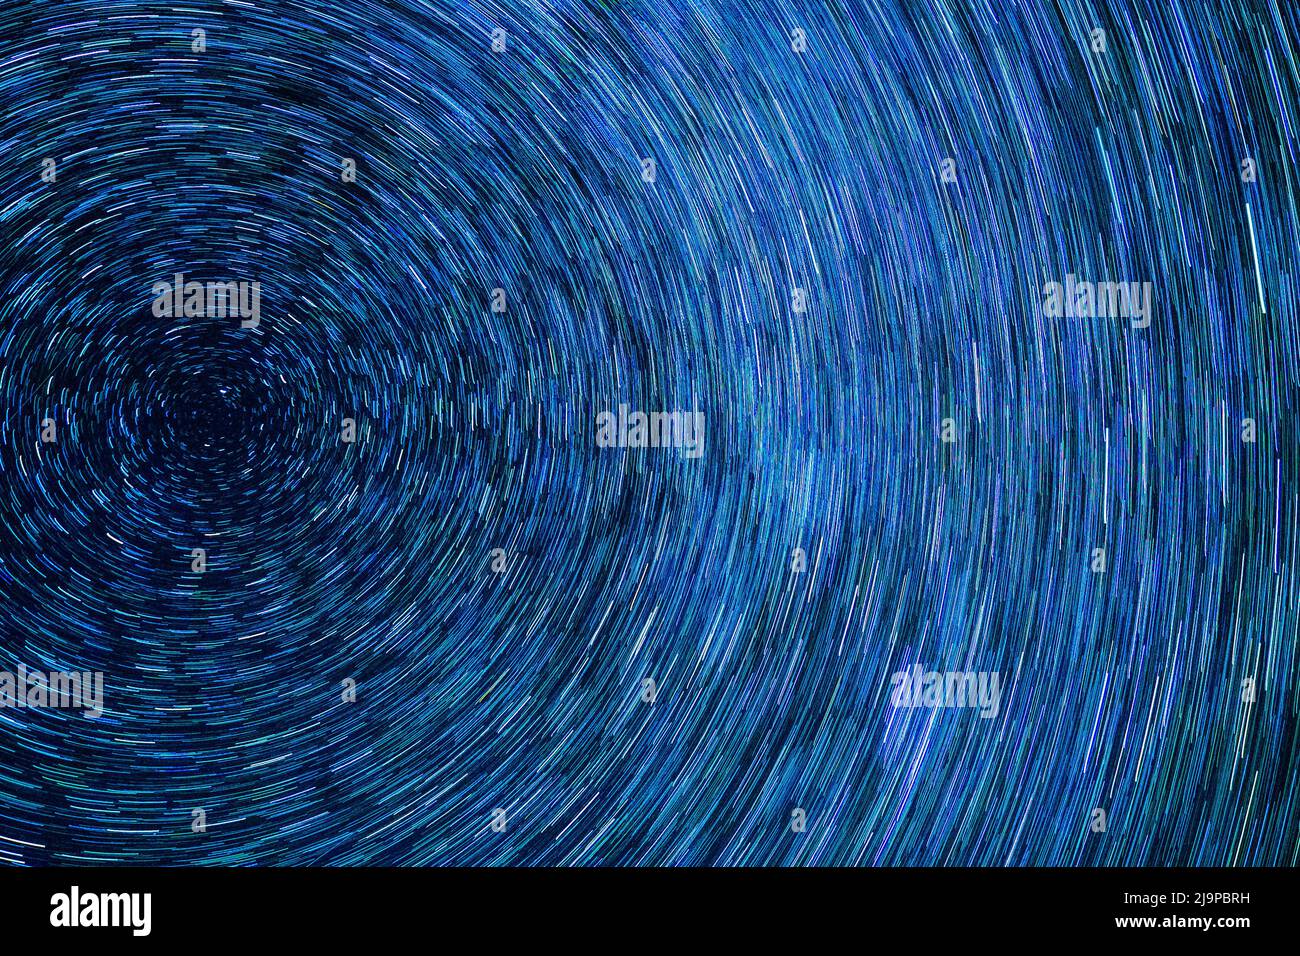 Blue dark night sky with many stars Milkyway cosmos background Stock Photo